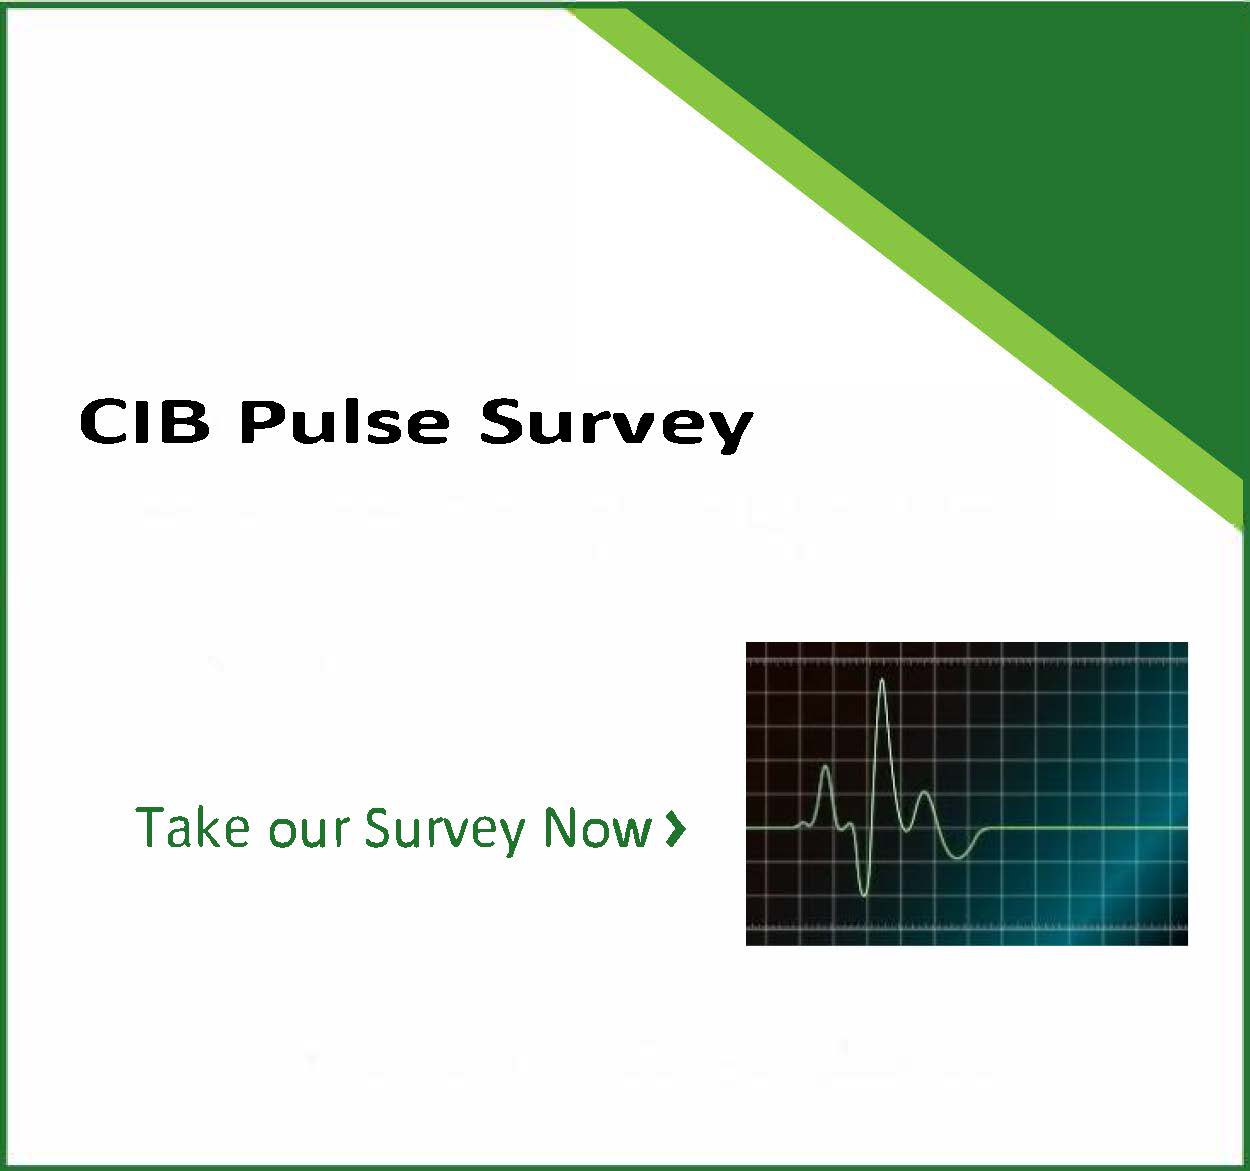 CIB Pulse: Impact of Covid-19